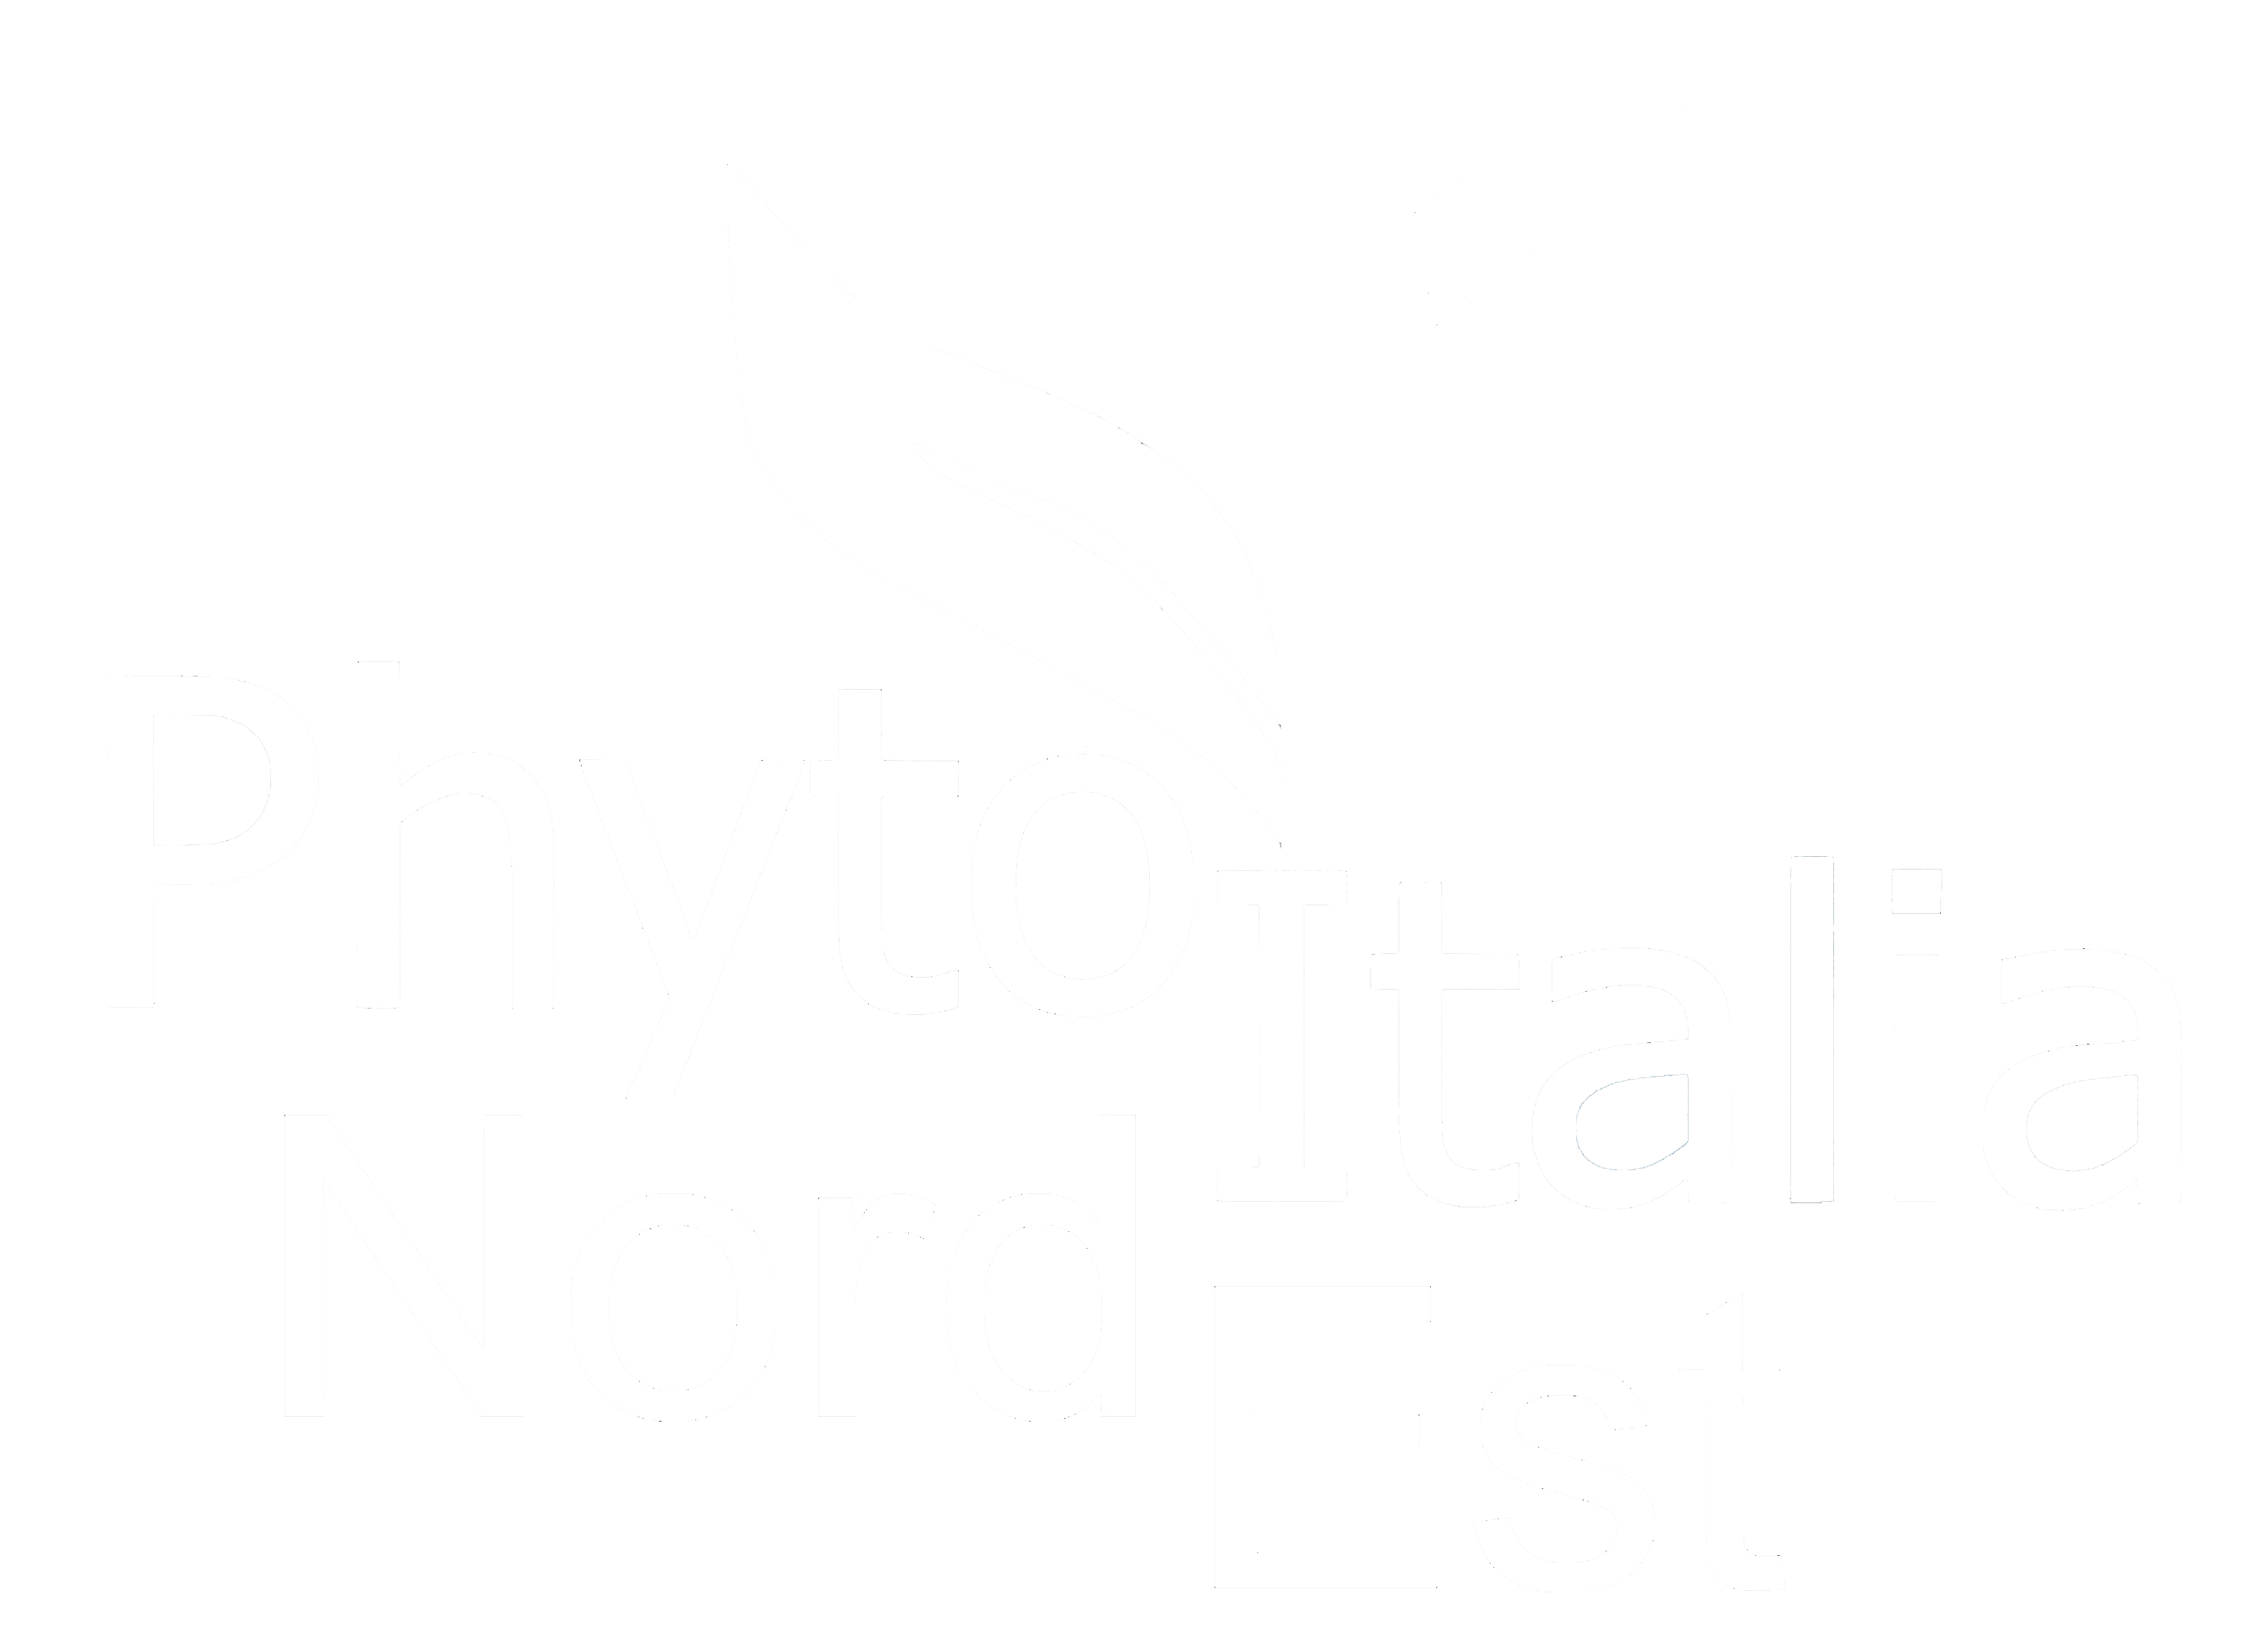 Phytoitalia Nord-Est Srl